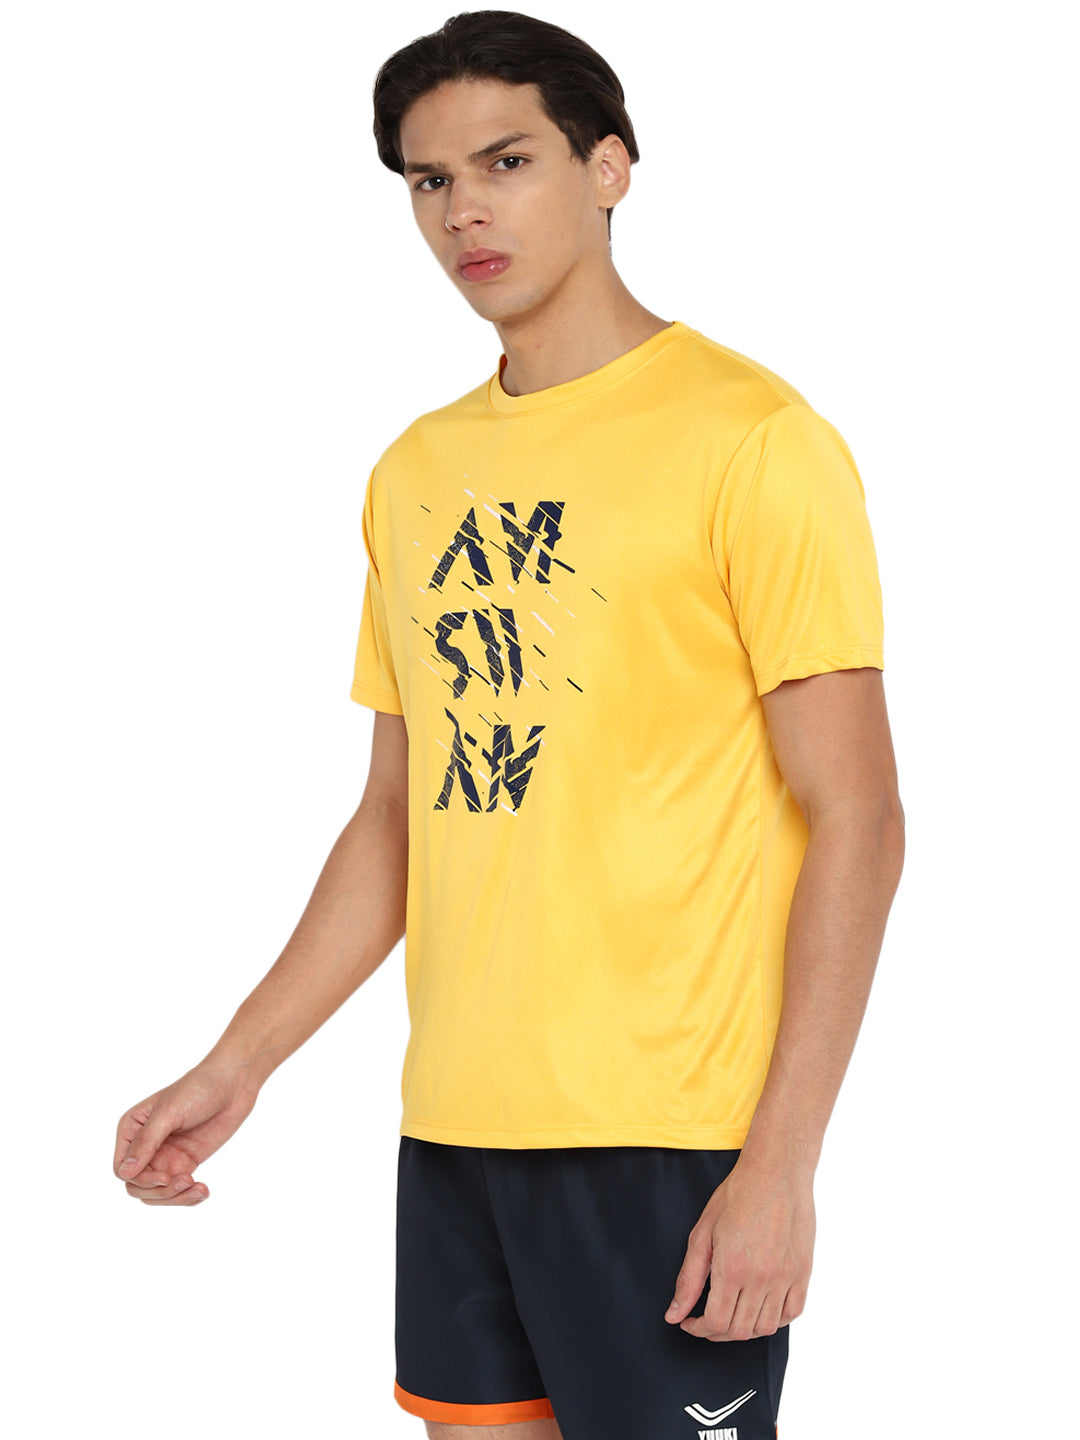 Shop Men awesome printed tshirt Online